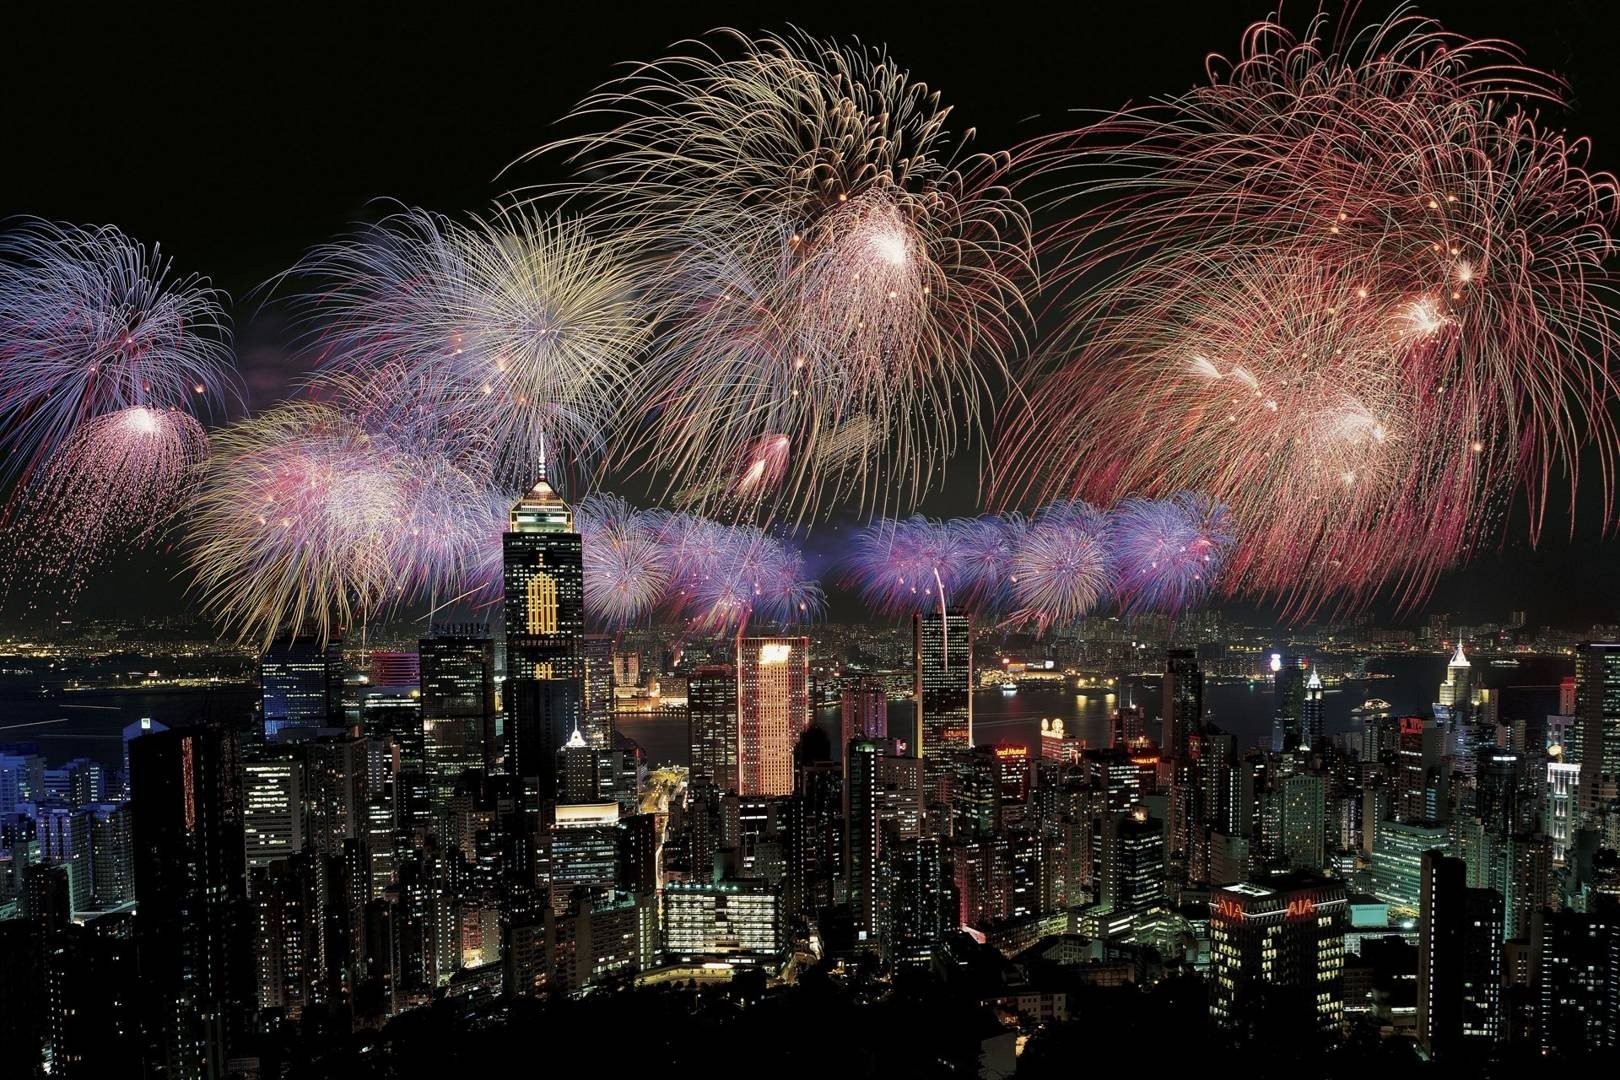 fireworks-exploding-over-city-hong-kong-china-conde-nast-traveller-26nov15-rex.jpg